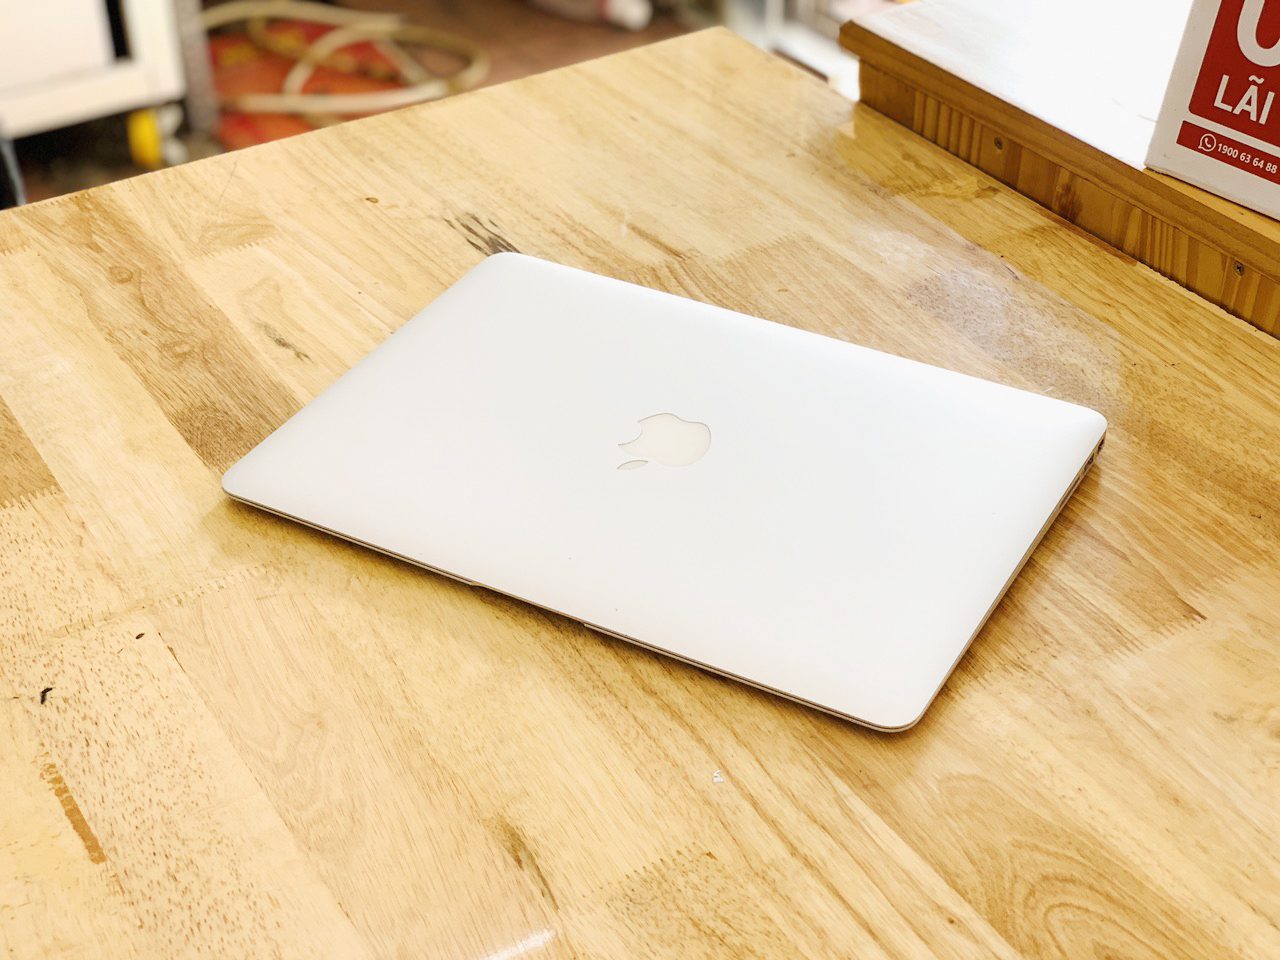 Macbook Air 13-inch,Mid 2012